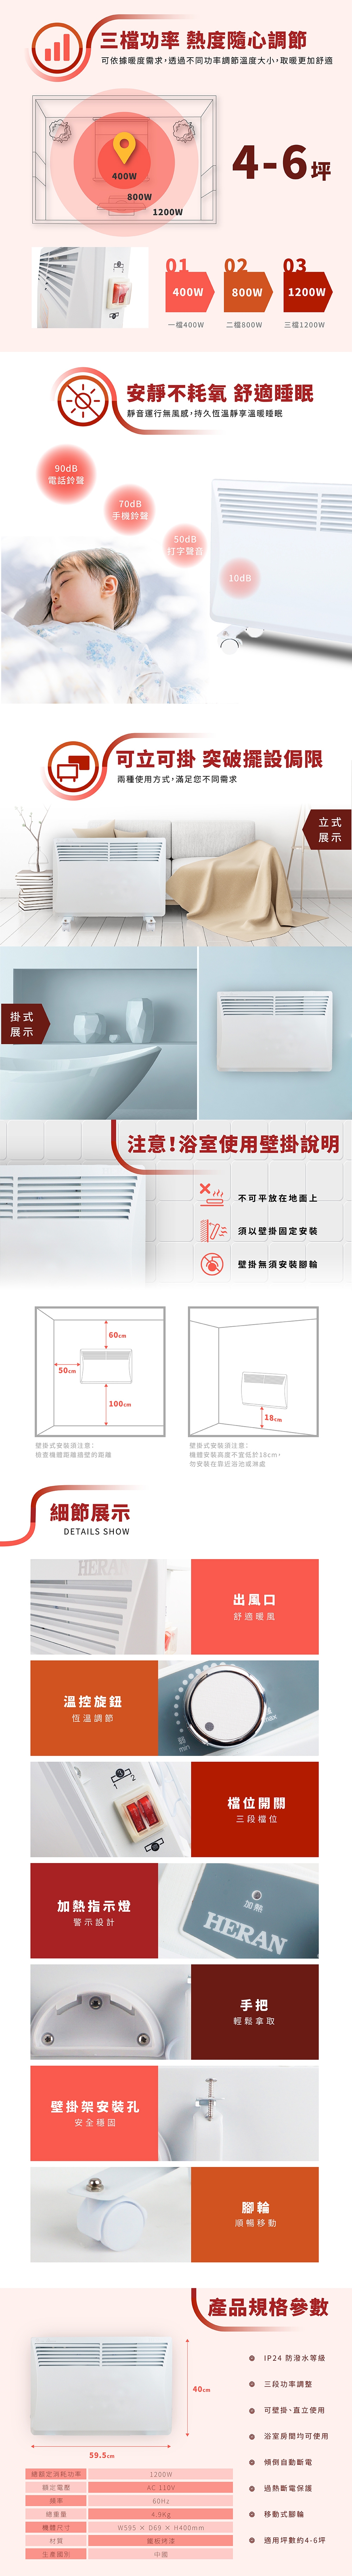 HERAN 禾聯 對流式壁掛電暖器 浴室可用 適用6坪以下 HCH-120L1